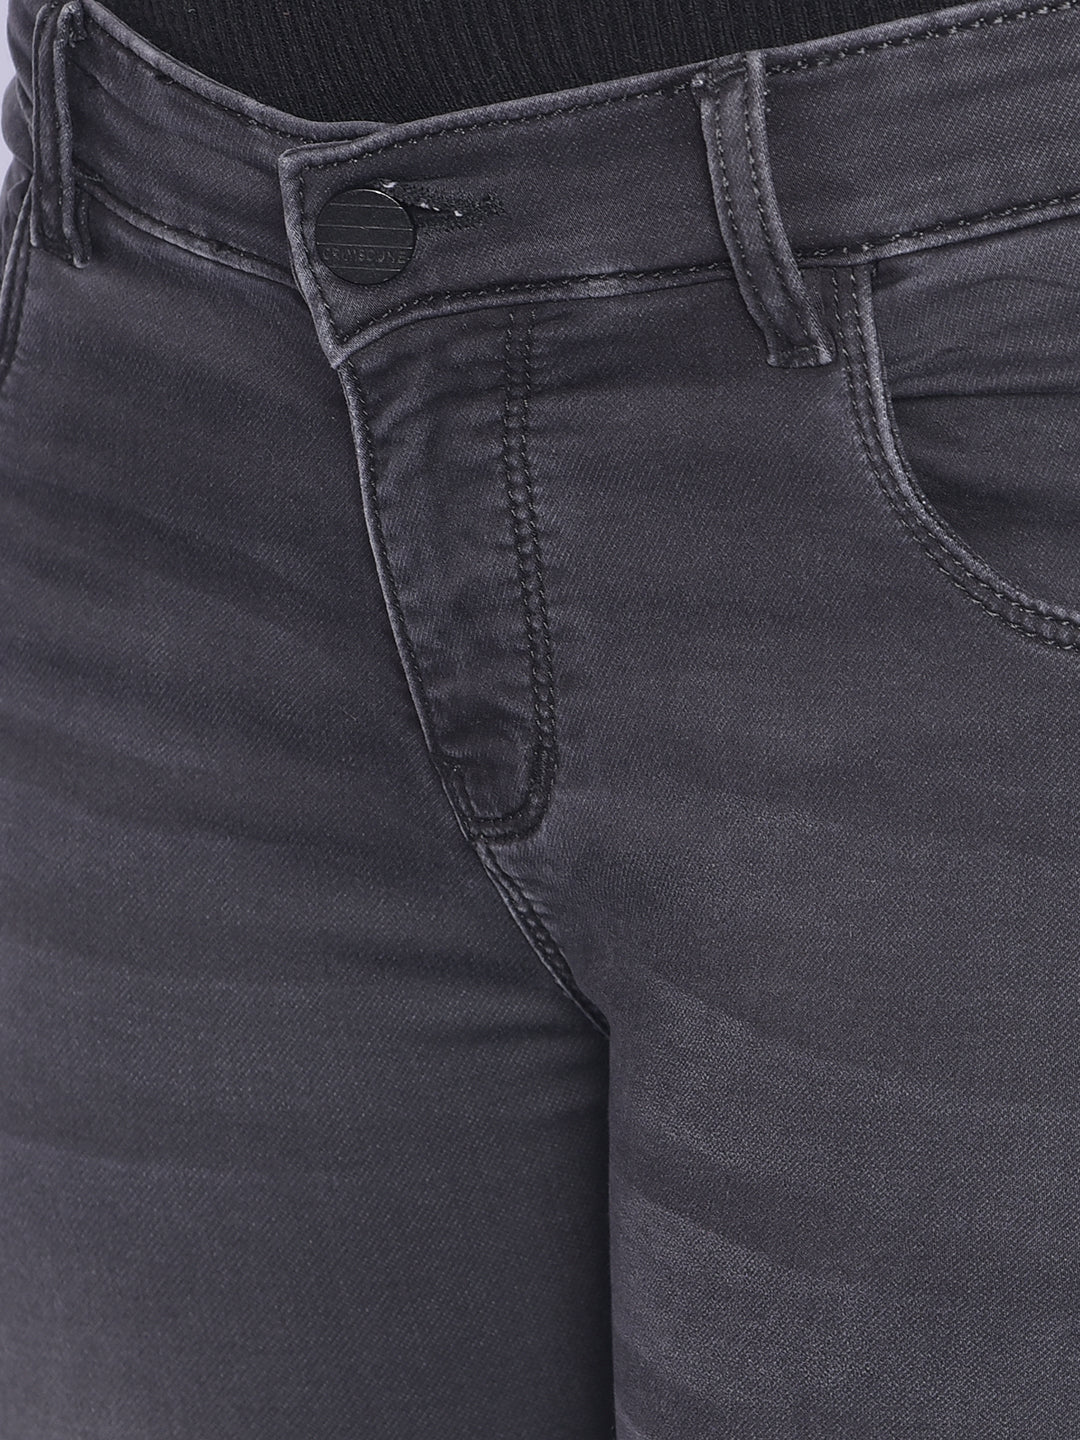 Grey Bootcut Jeans-Women Trousers-Crimsoune Club